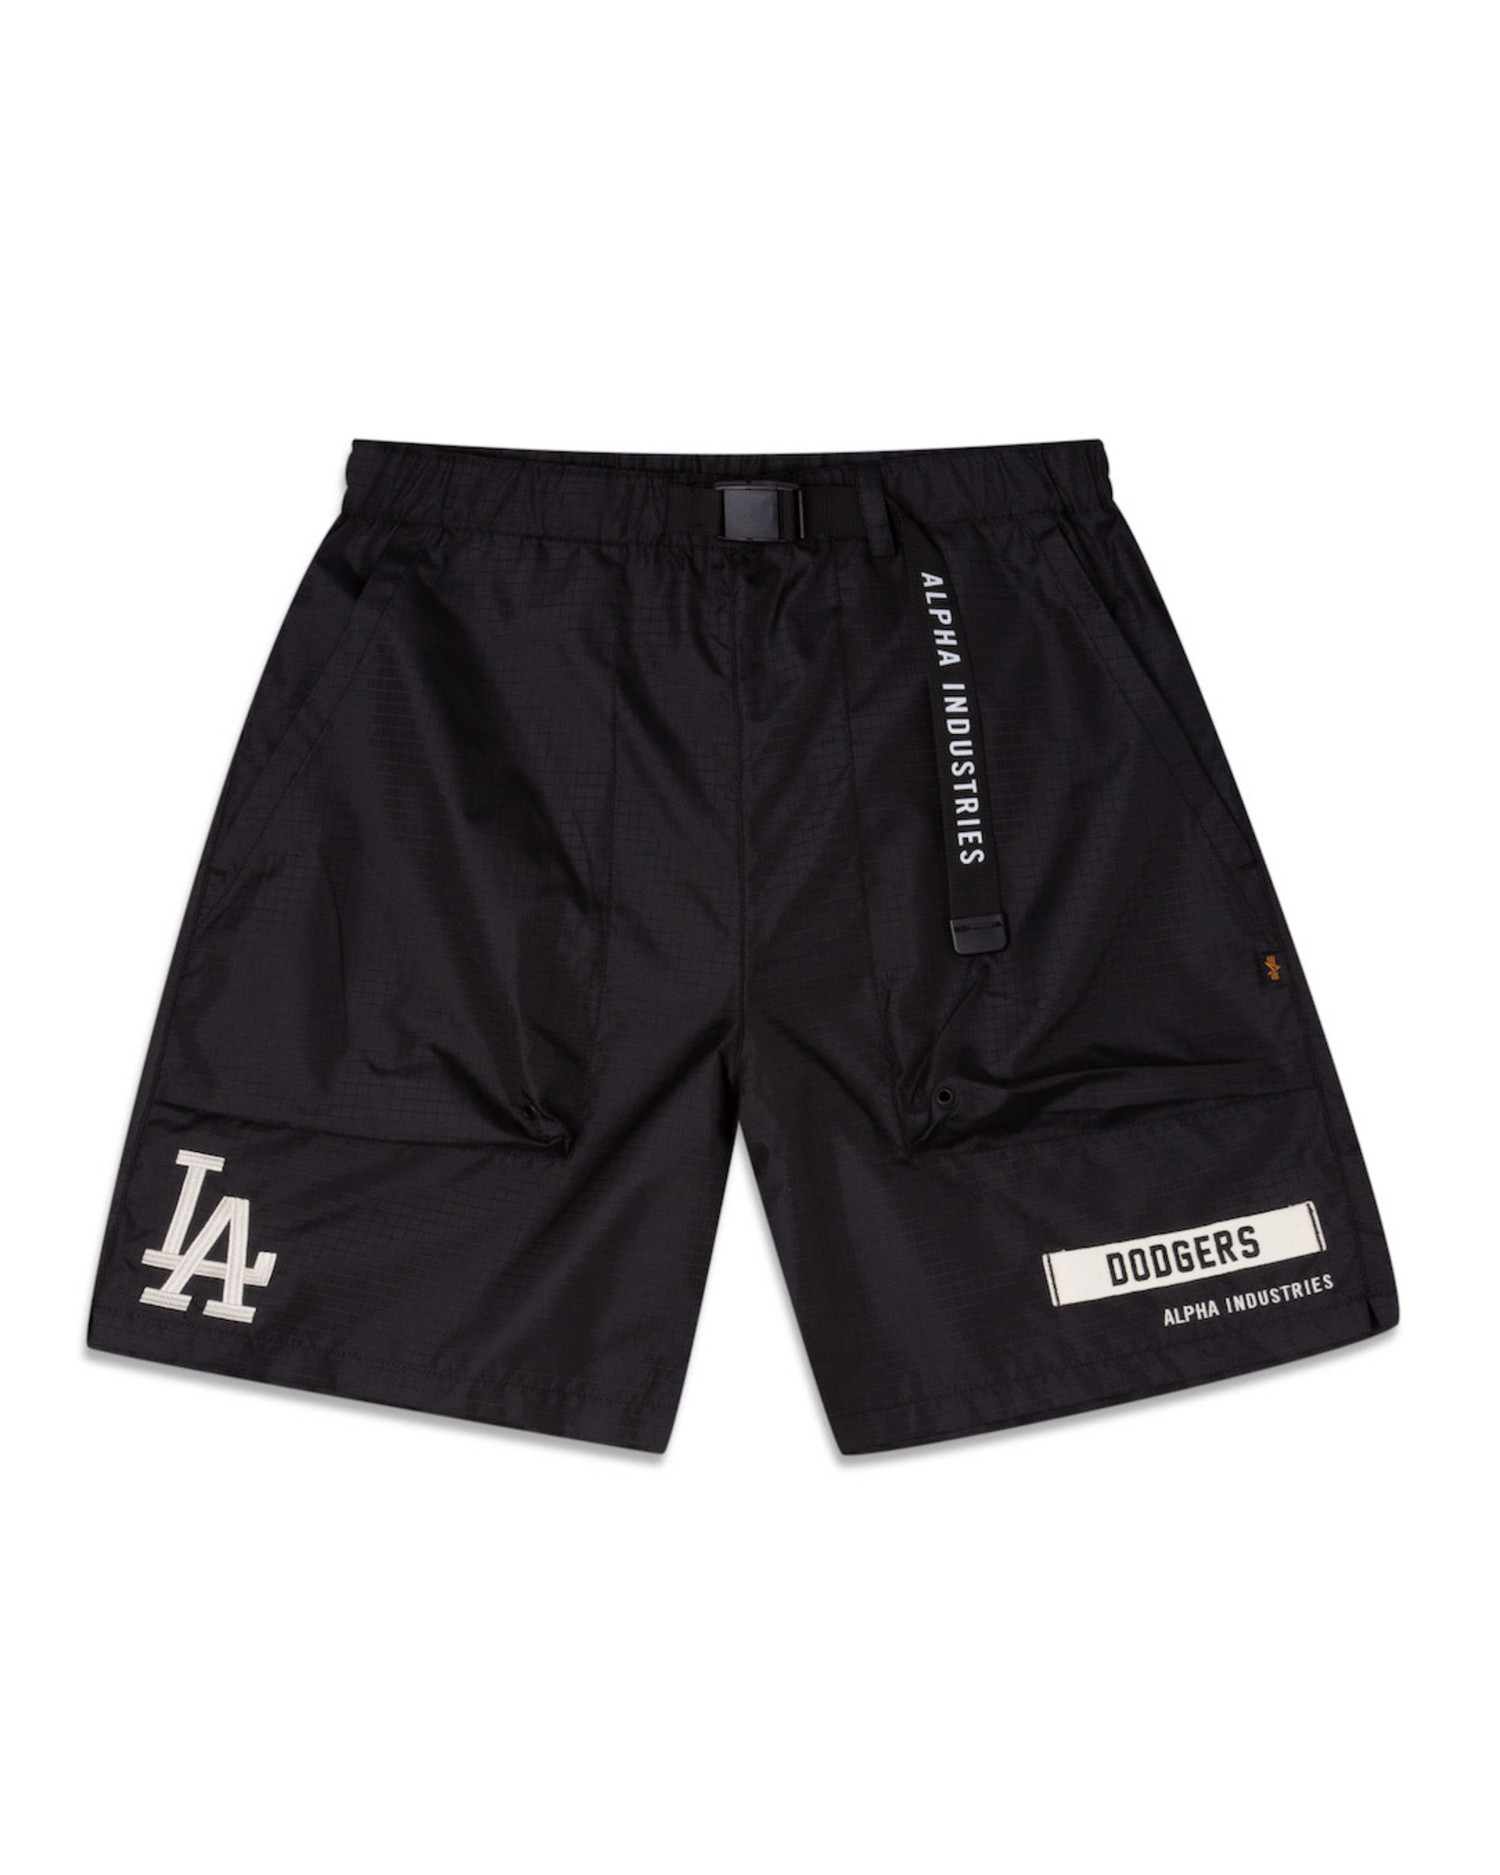 LA Dodgers NE M 23 Alpha Shorts - The Locker Room of Downey